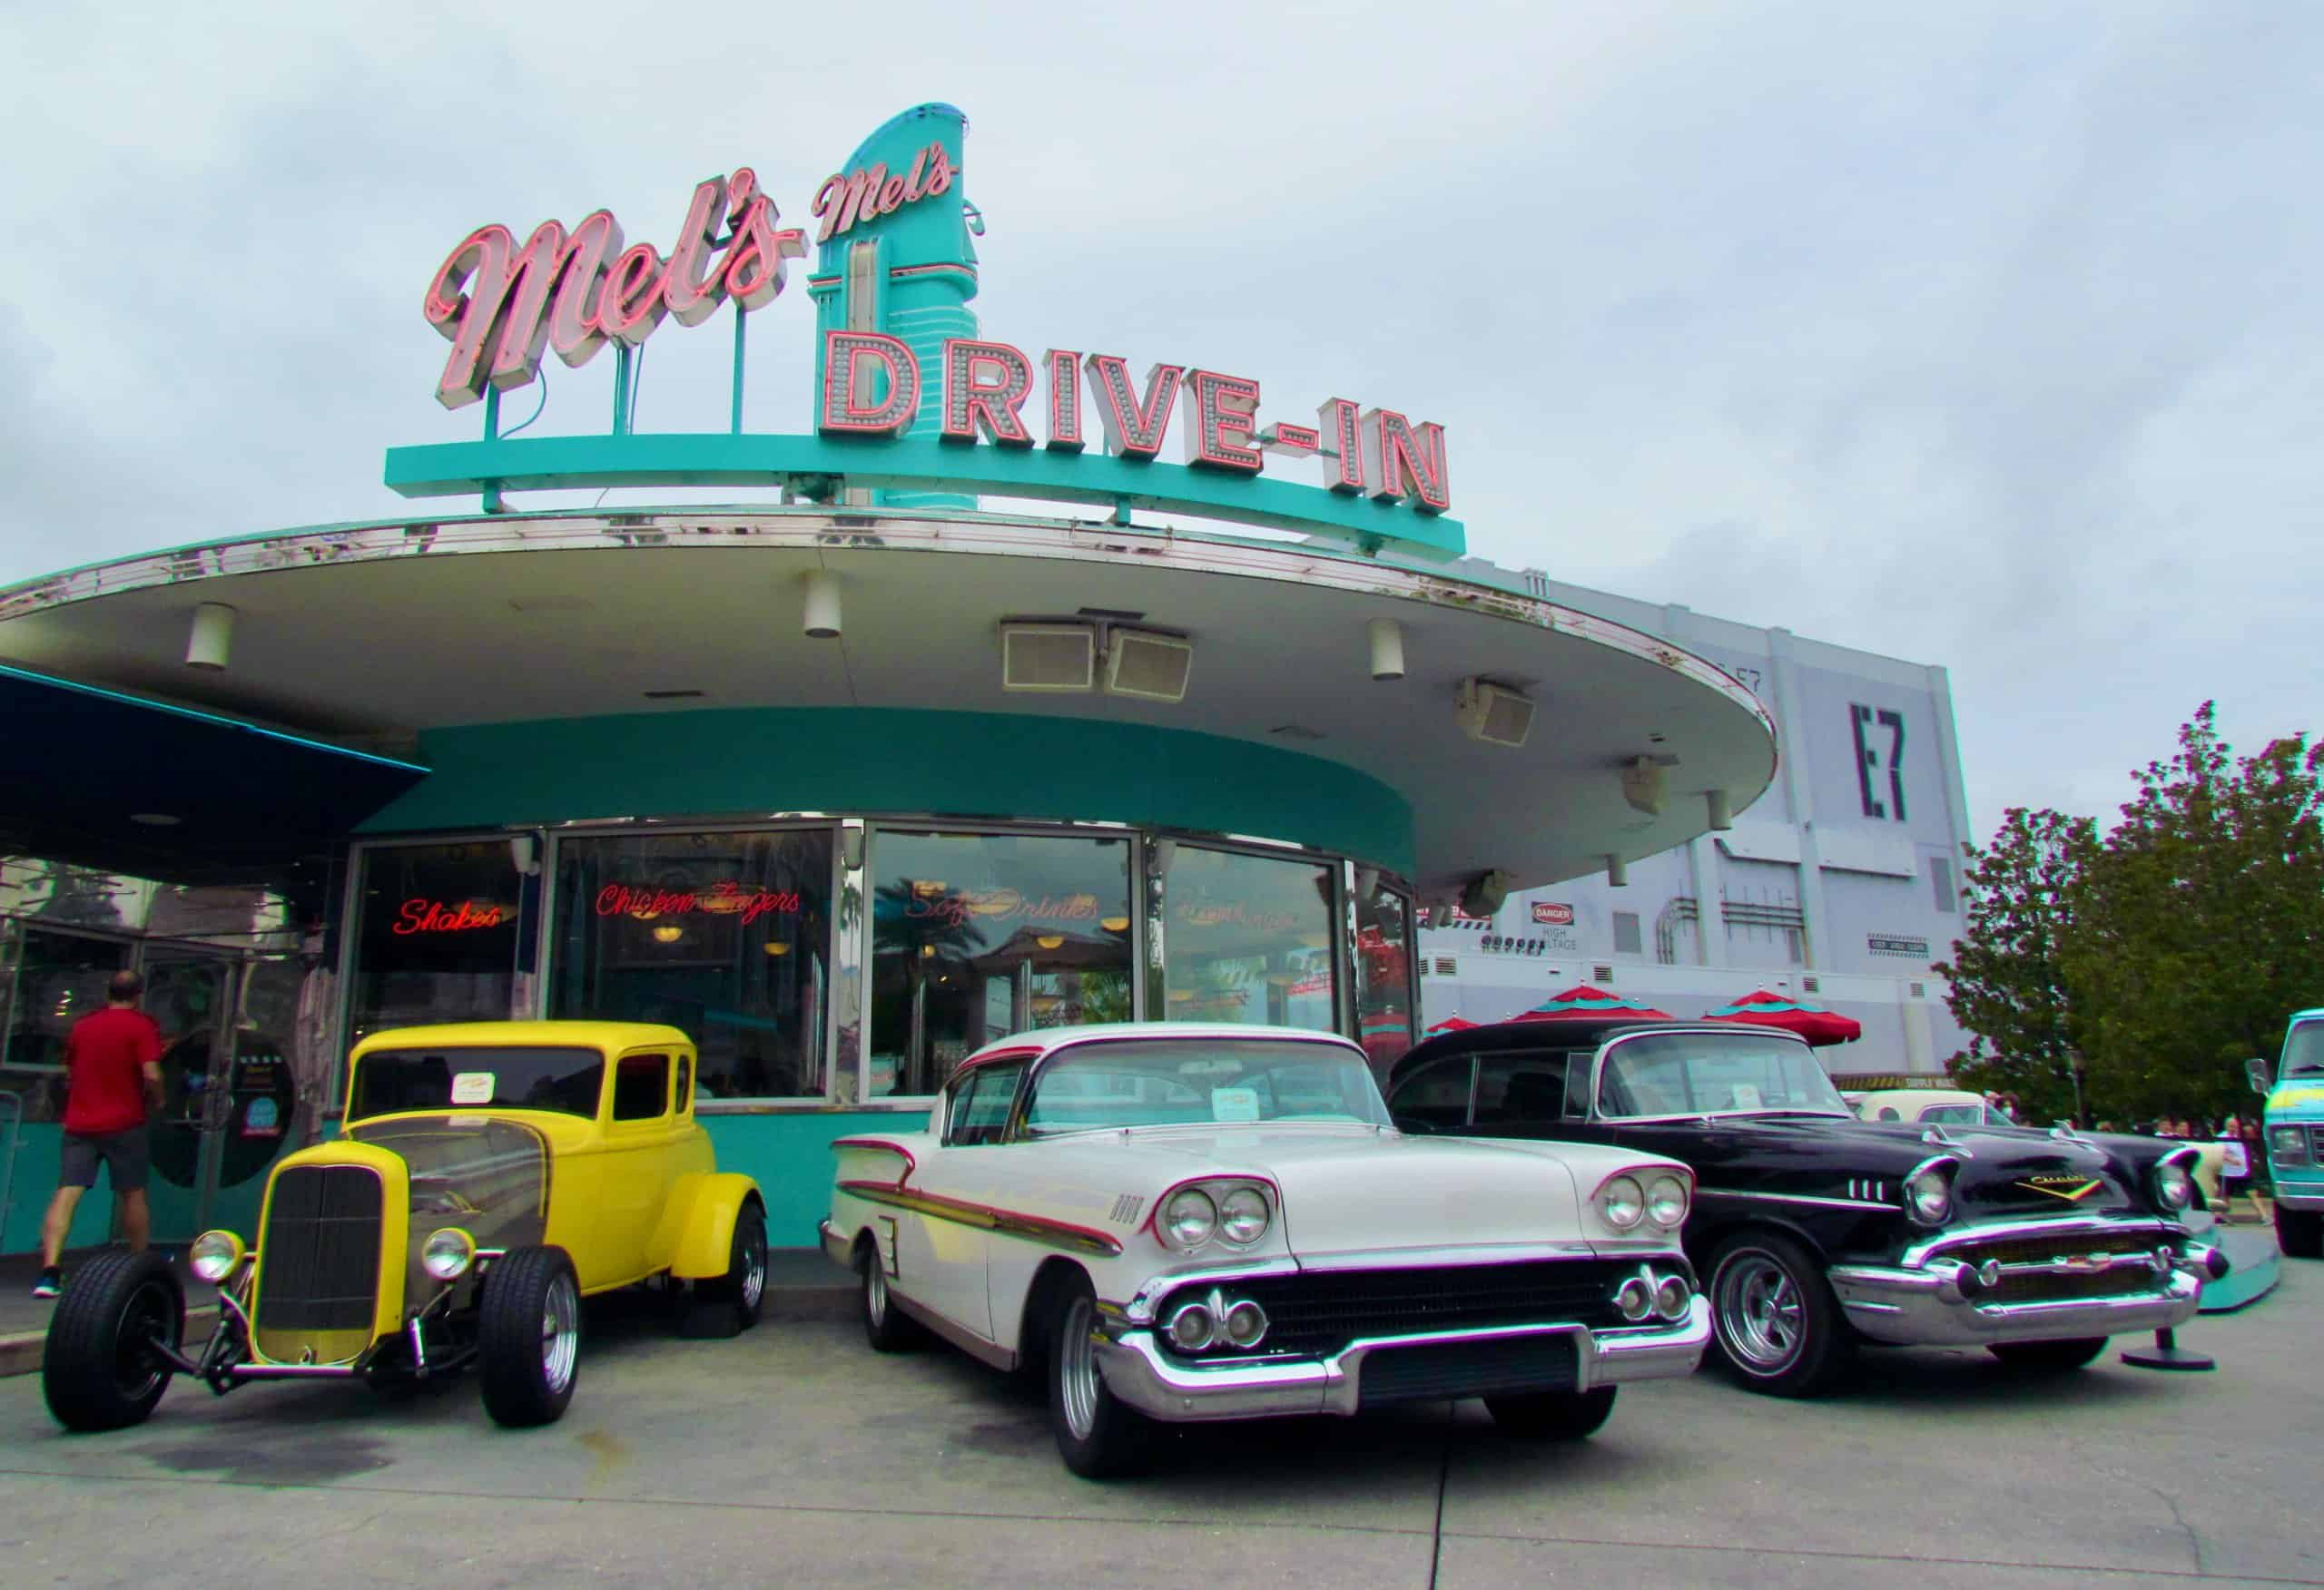 Universal Studios Florida is car museum with an amusement park